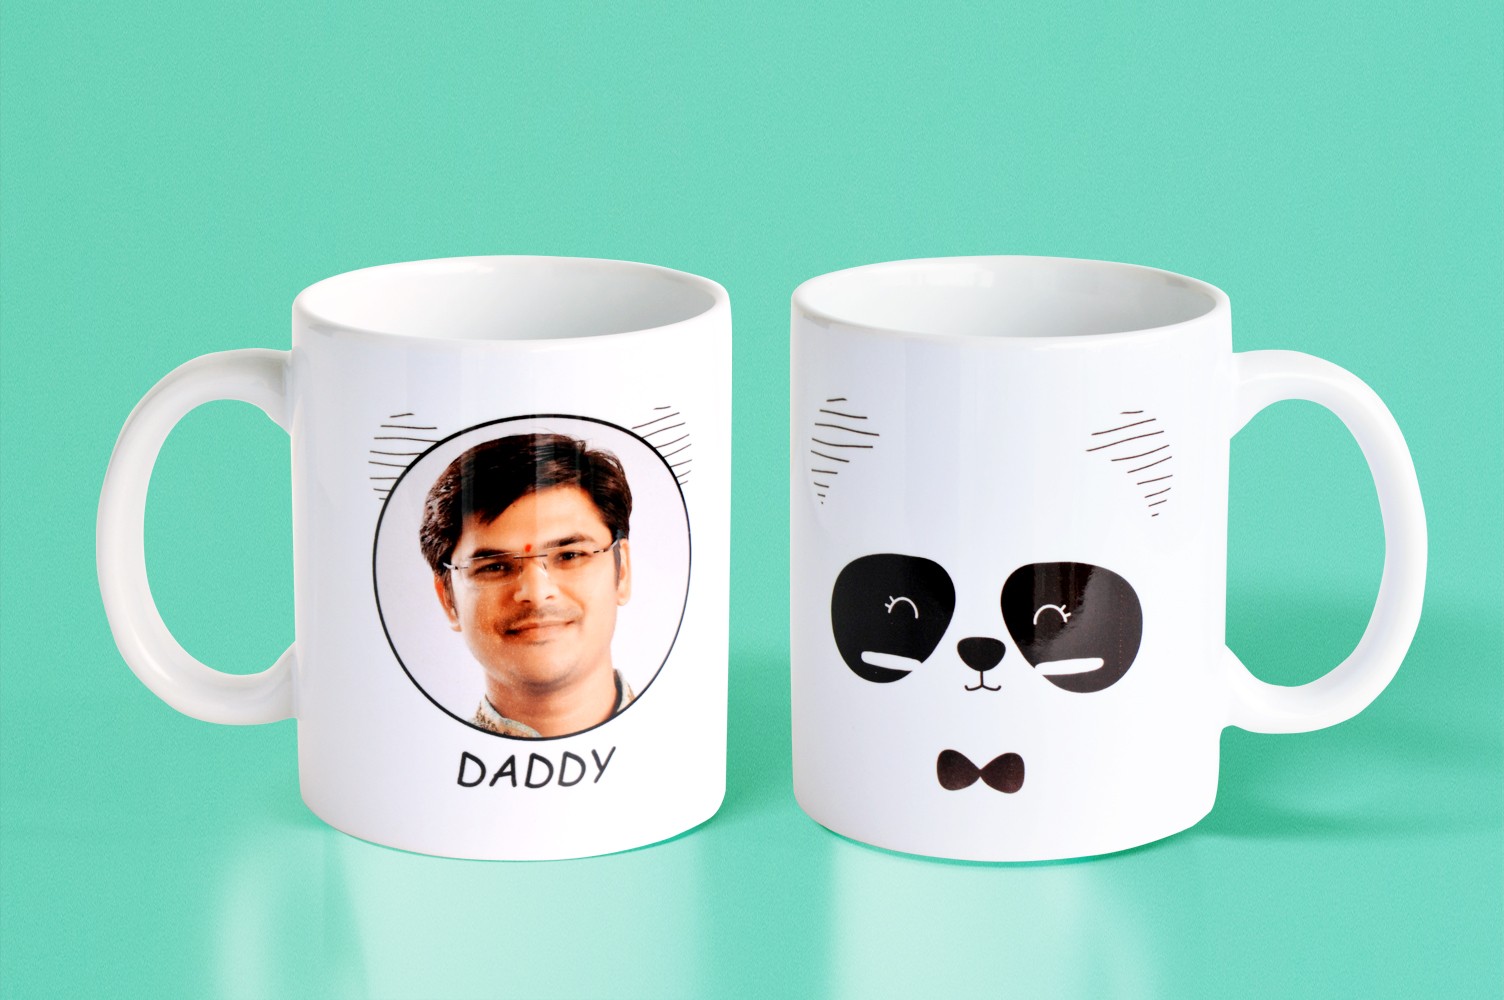 Gift For Daddy Personalised Mug